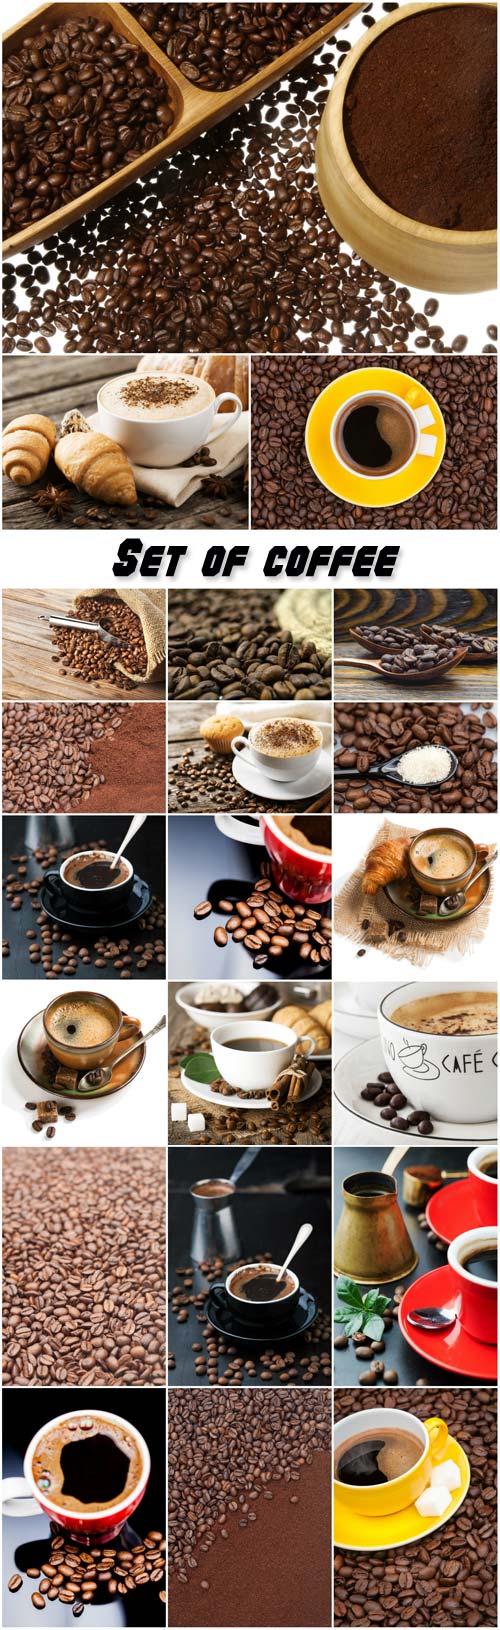 Set of coffee stock photo